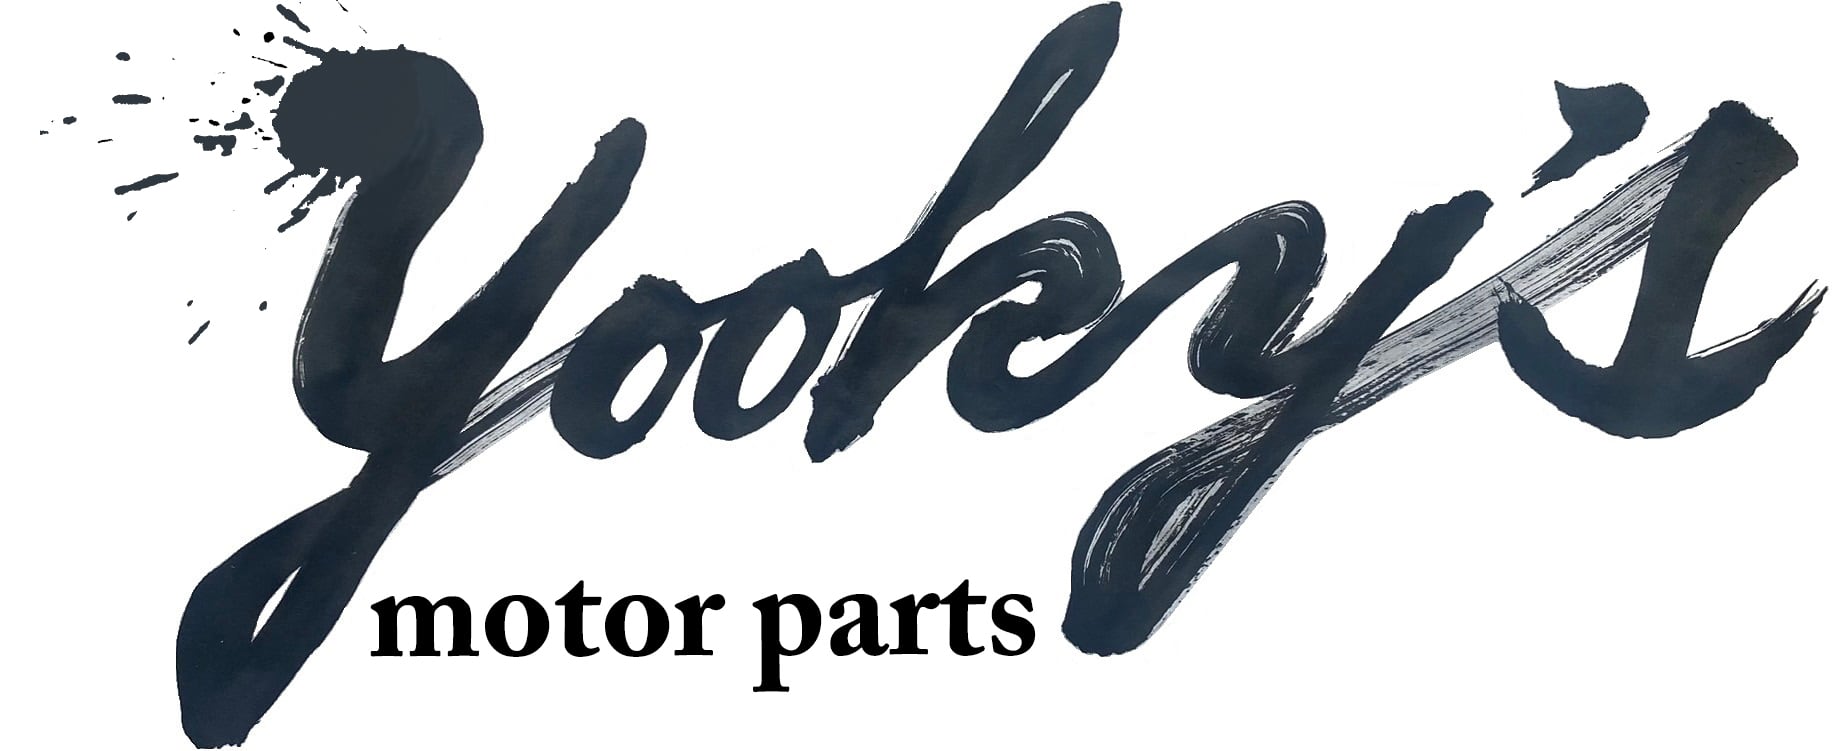 Yooky's motor parts